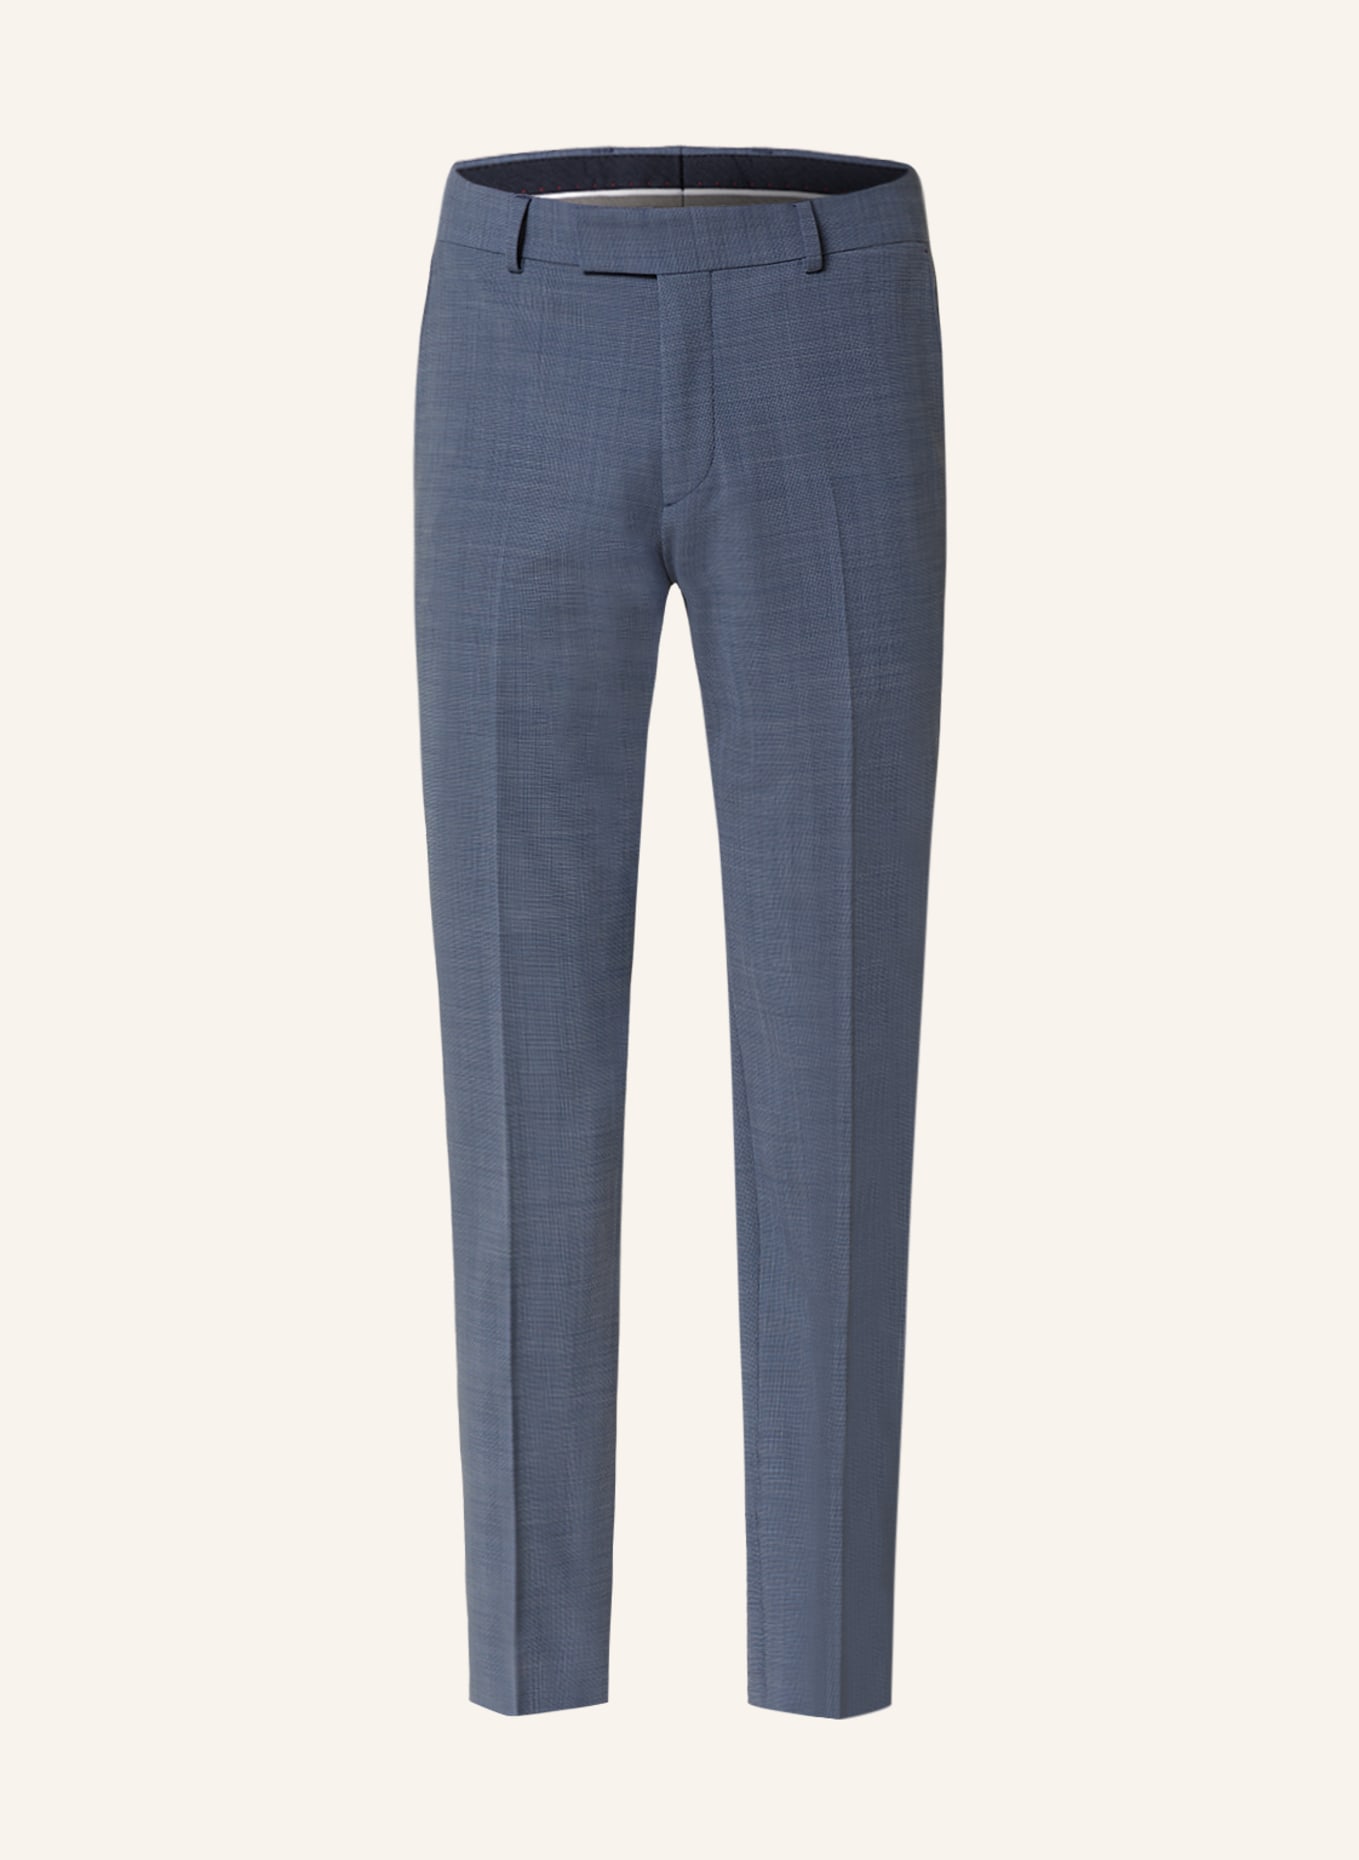 STRELLSON Anzughose MAX Slim Fit, Farbe: 420 Medium Blue                420 (Bild 1)